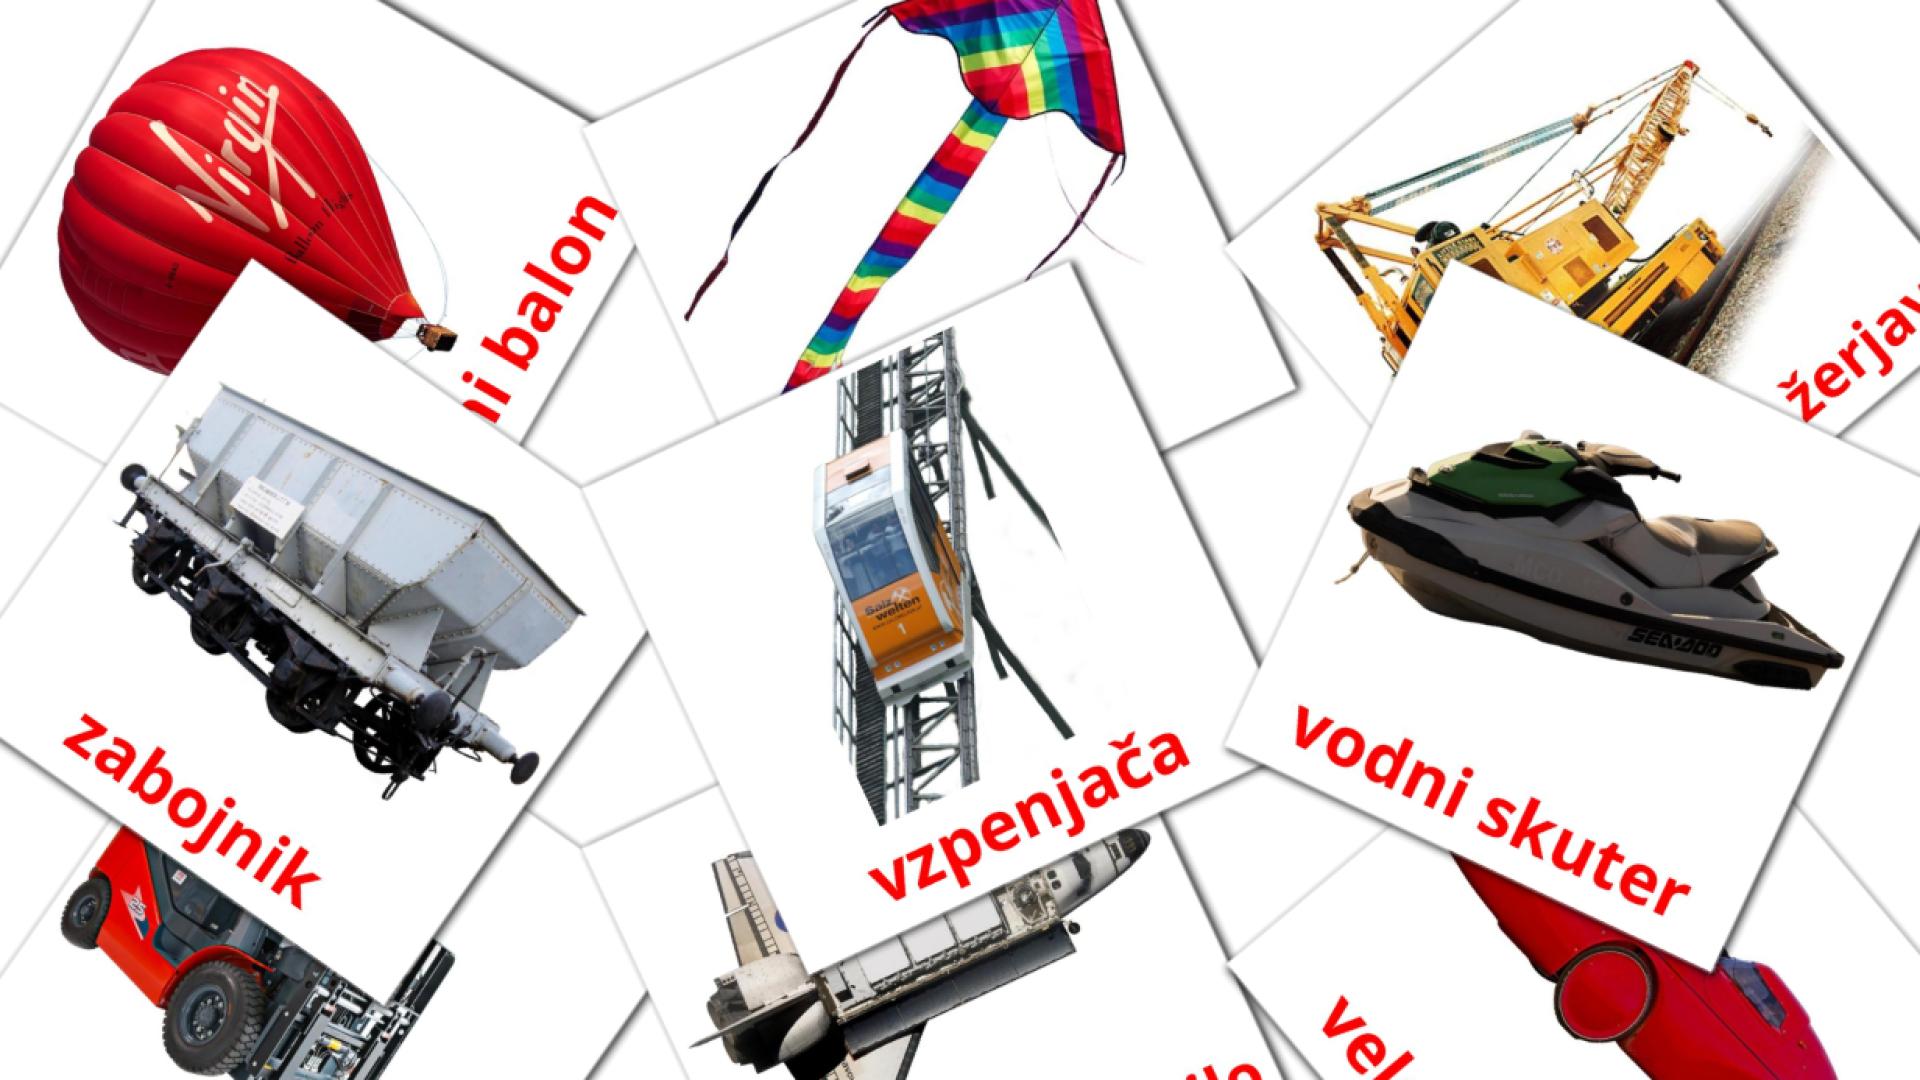 Promet slovenian vocabulary flashcards